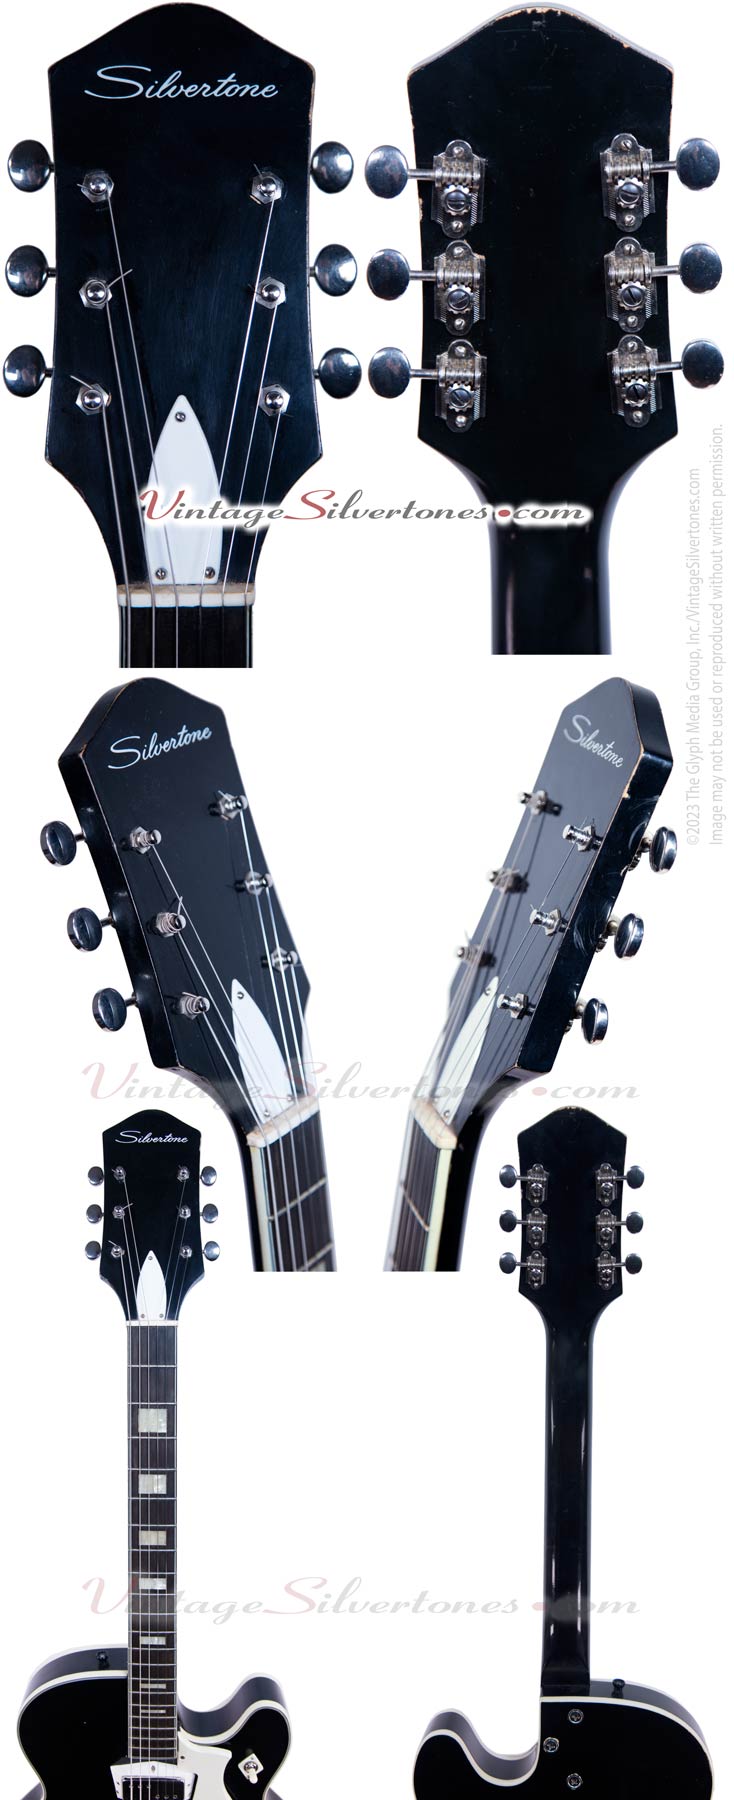 Silvertone 1446 electric guitar headstock details